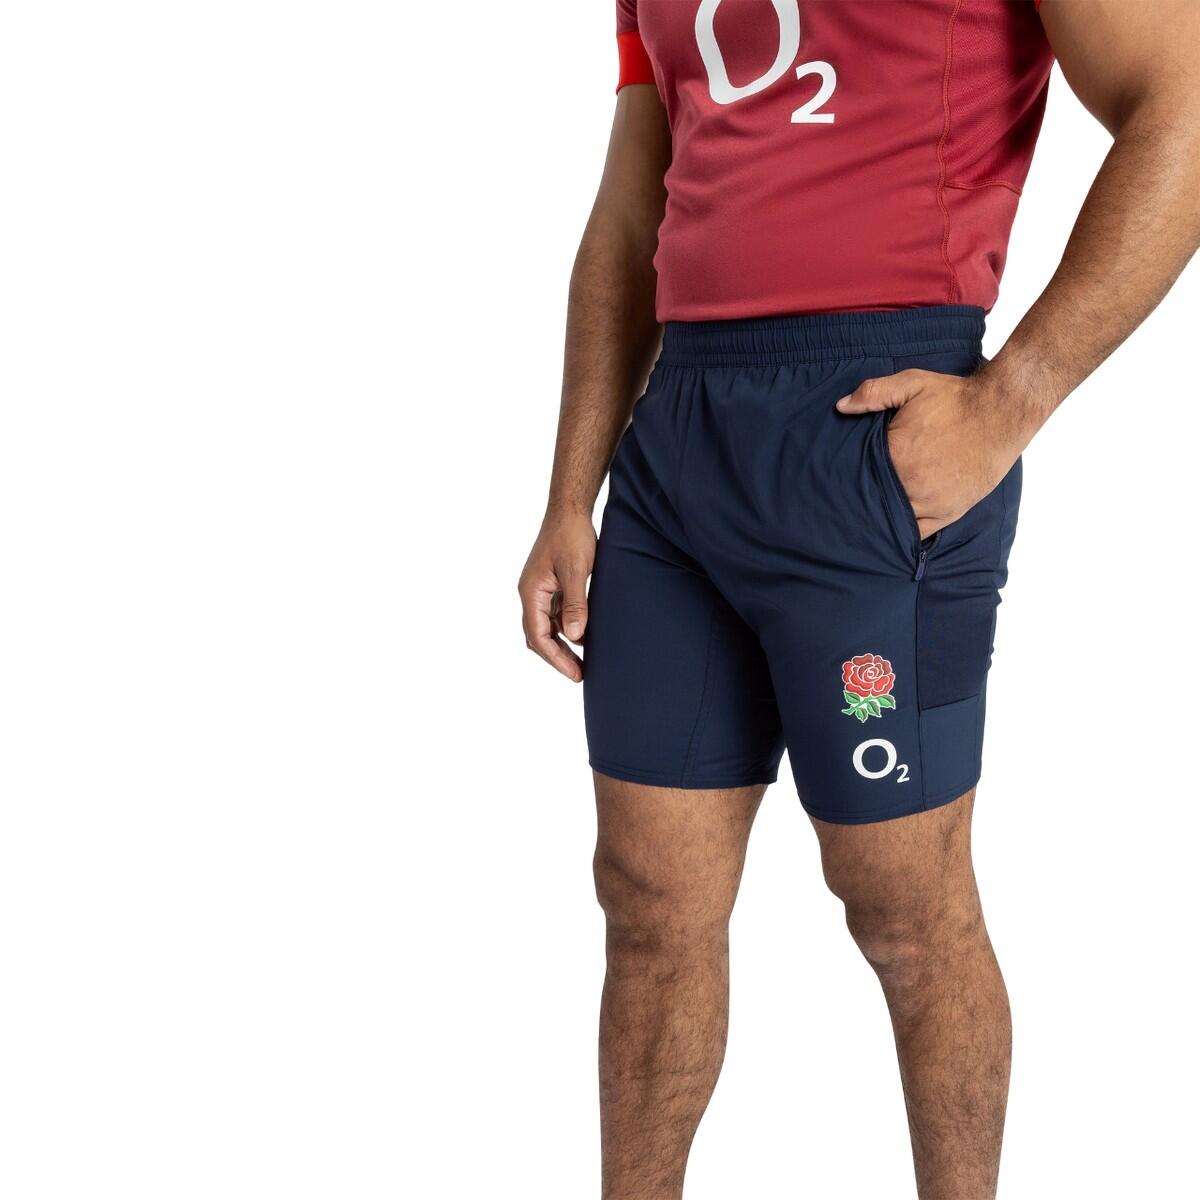 Mens 23/24 England Rugby Gym Shorts (Navy Blazer) 4/4